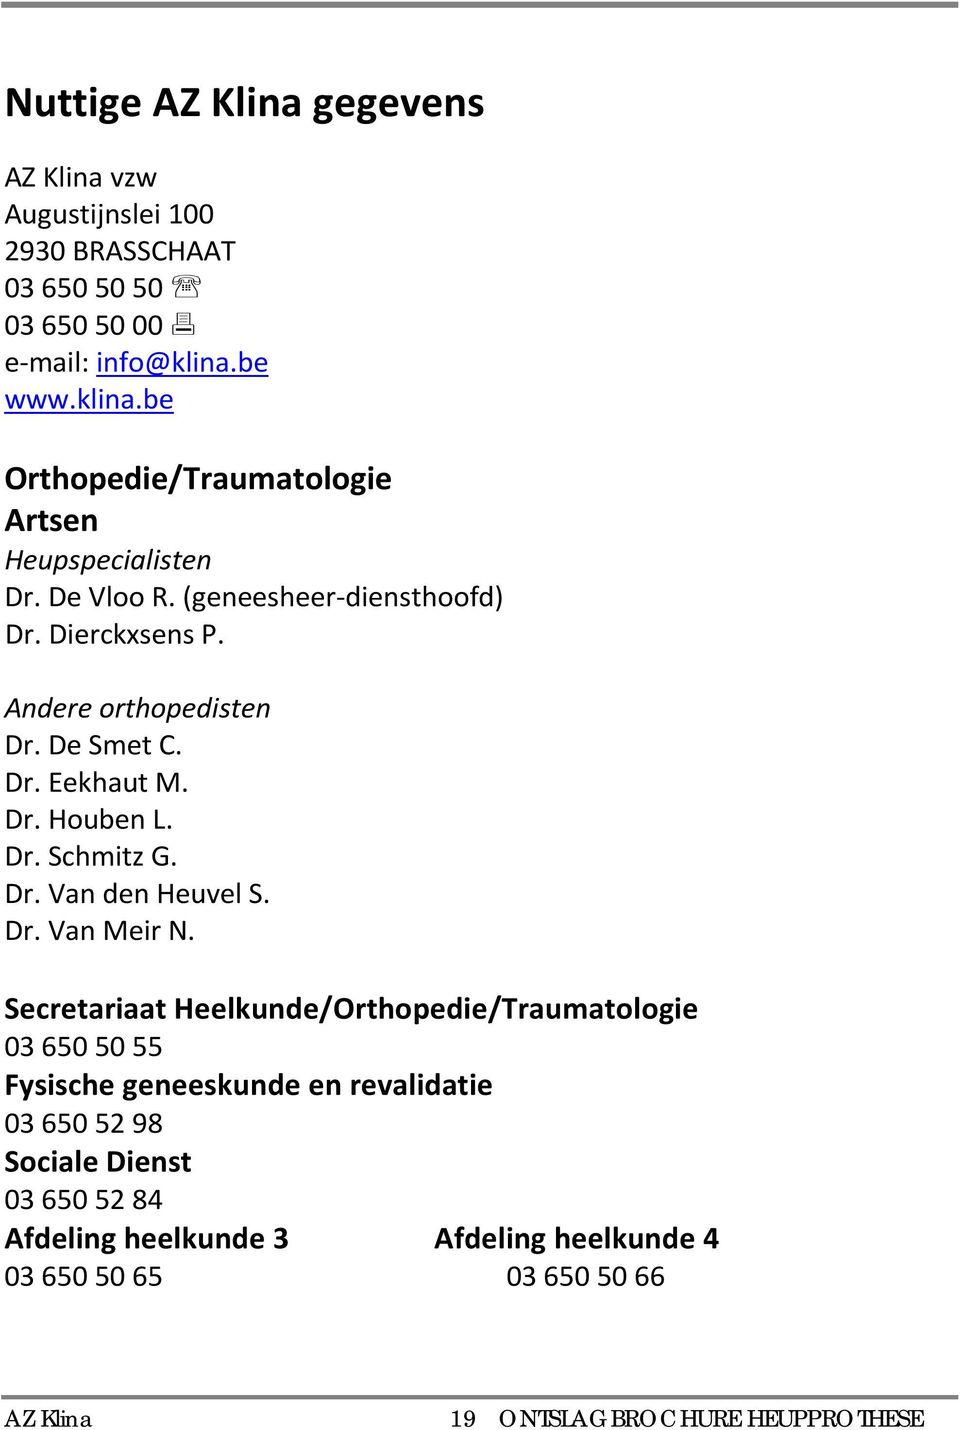 Andere orthopedisten Dr. De Smet C. Dr. Eekhaut M. Dr. Houben L. Dr. Schmitz G. Dr. Van den Heuvel S. Dr. Van Meir N.